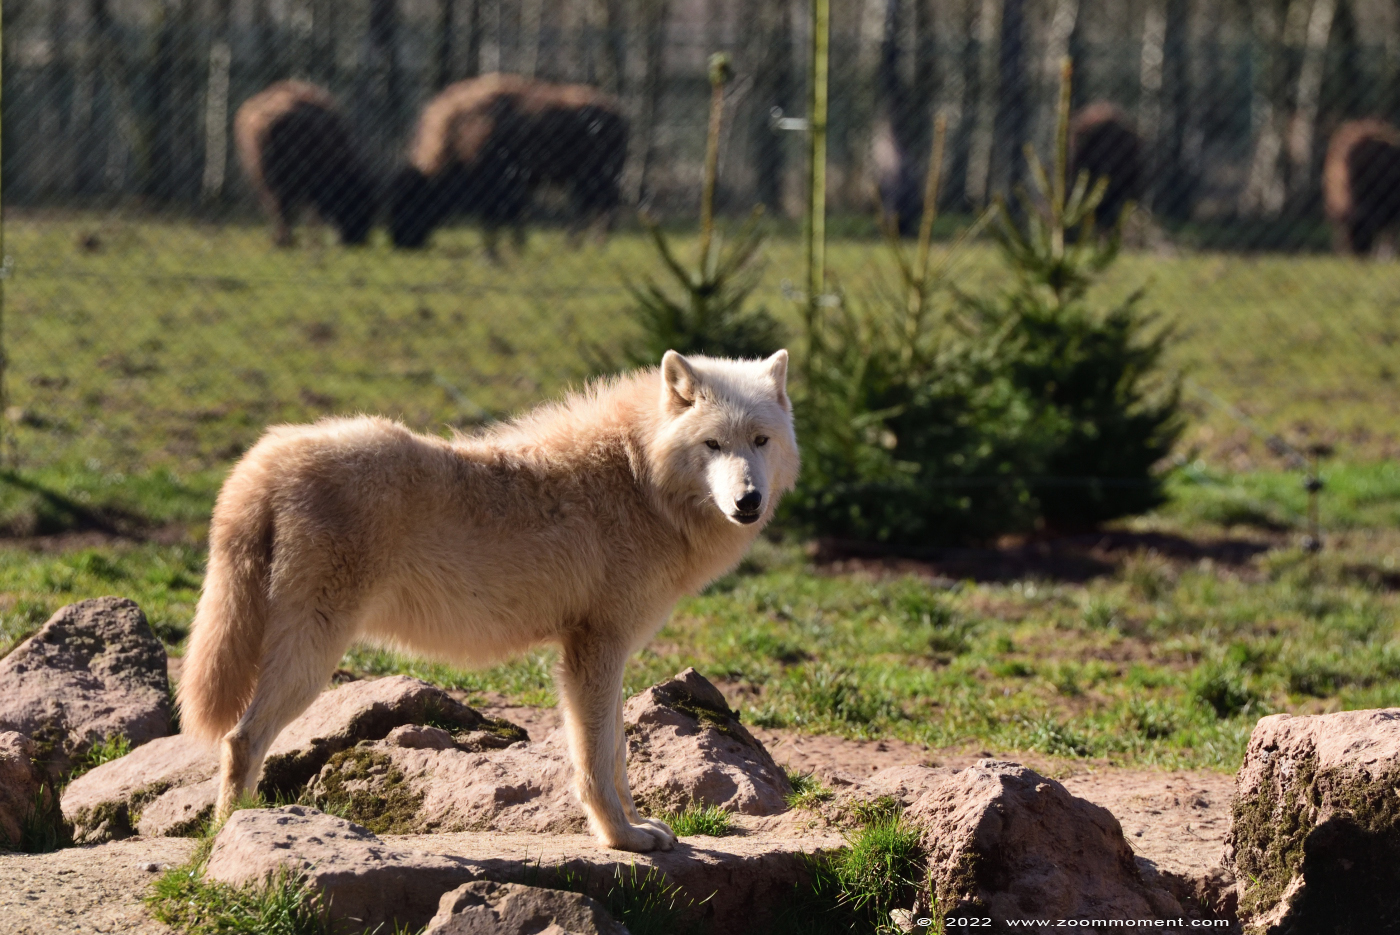 Witte wolf ( Canis lupus ) polar wolf
Słowa kluczowe: Monde Sauvage Belgium Witte wolf Canis lupus polar wolf